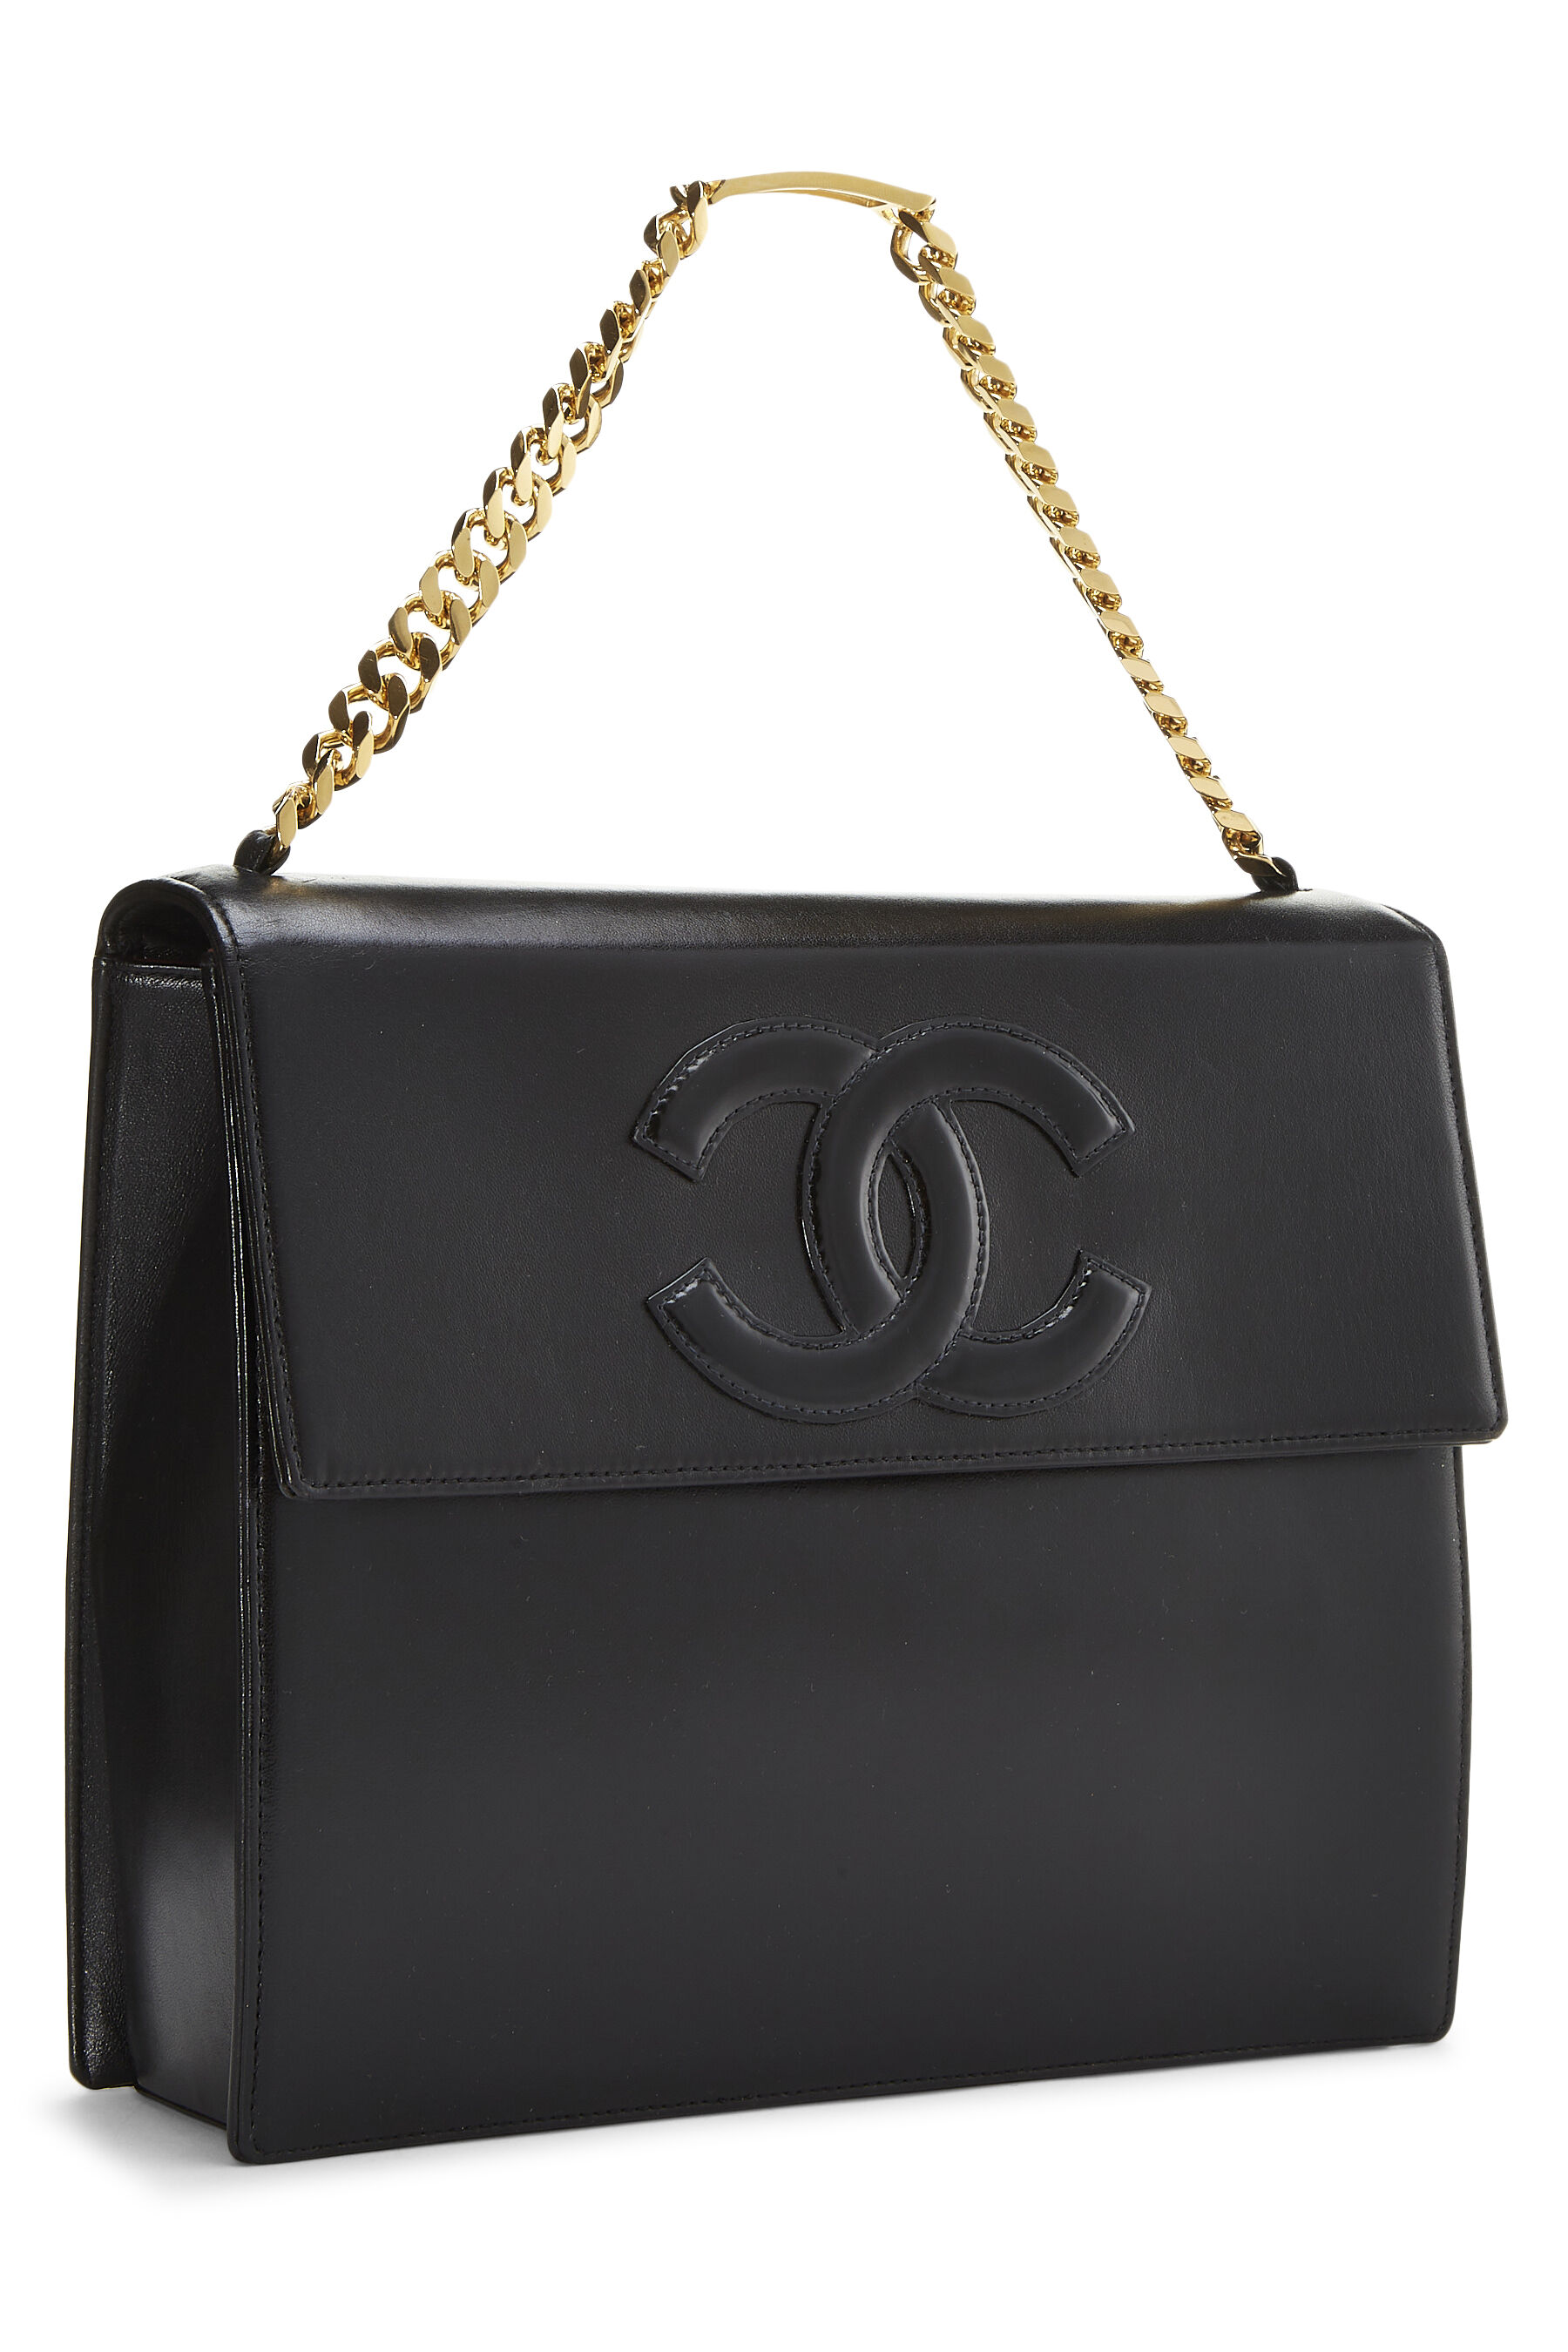 Chanel - Black Lambskin 'CC' Flap Handbag